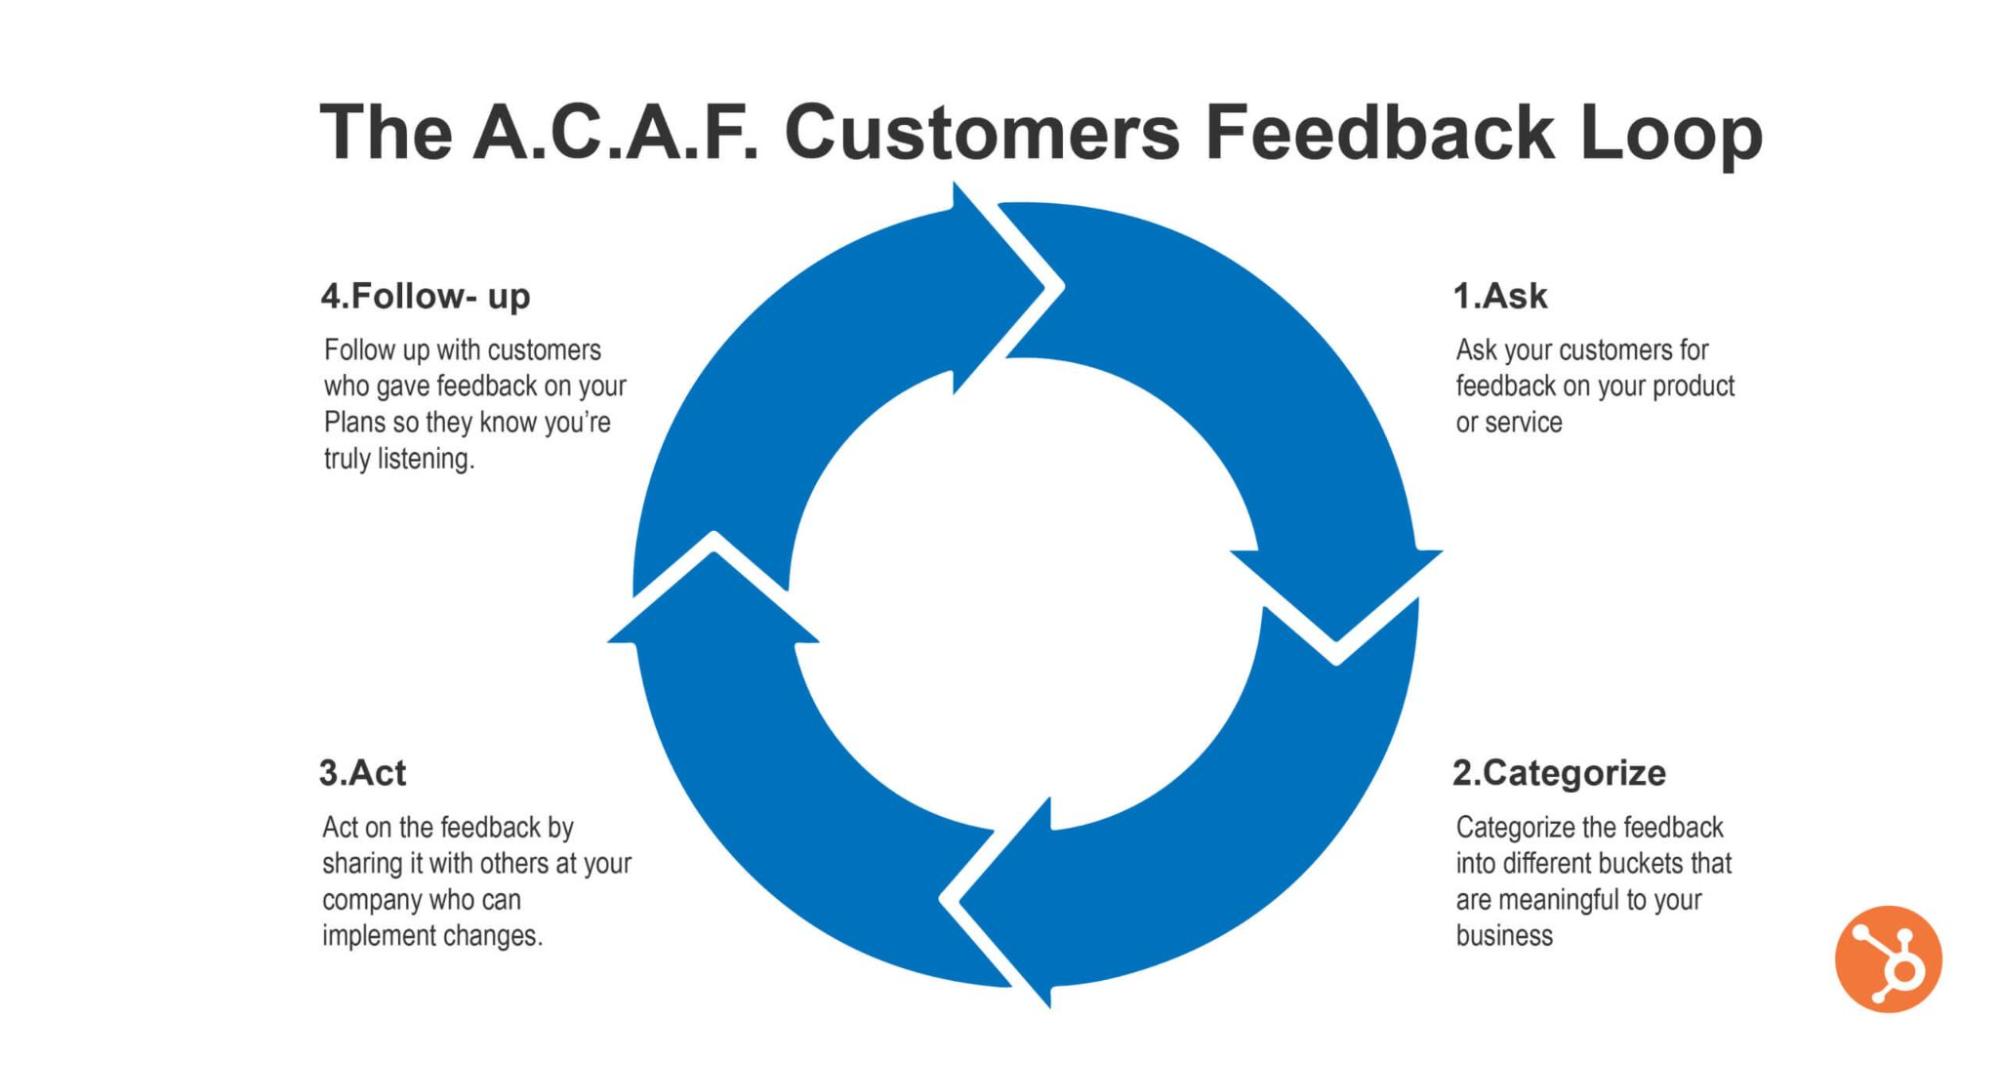 The ACAF Customers Feedback Loop